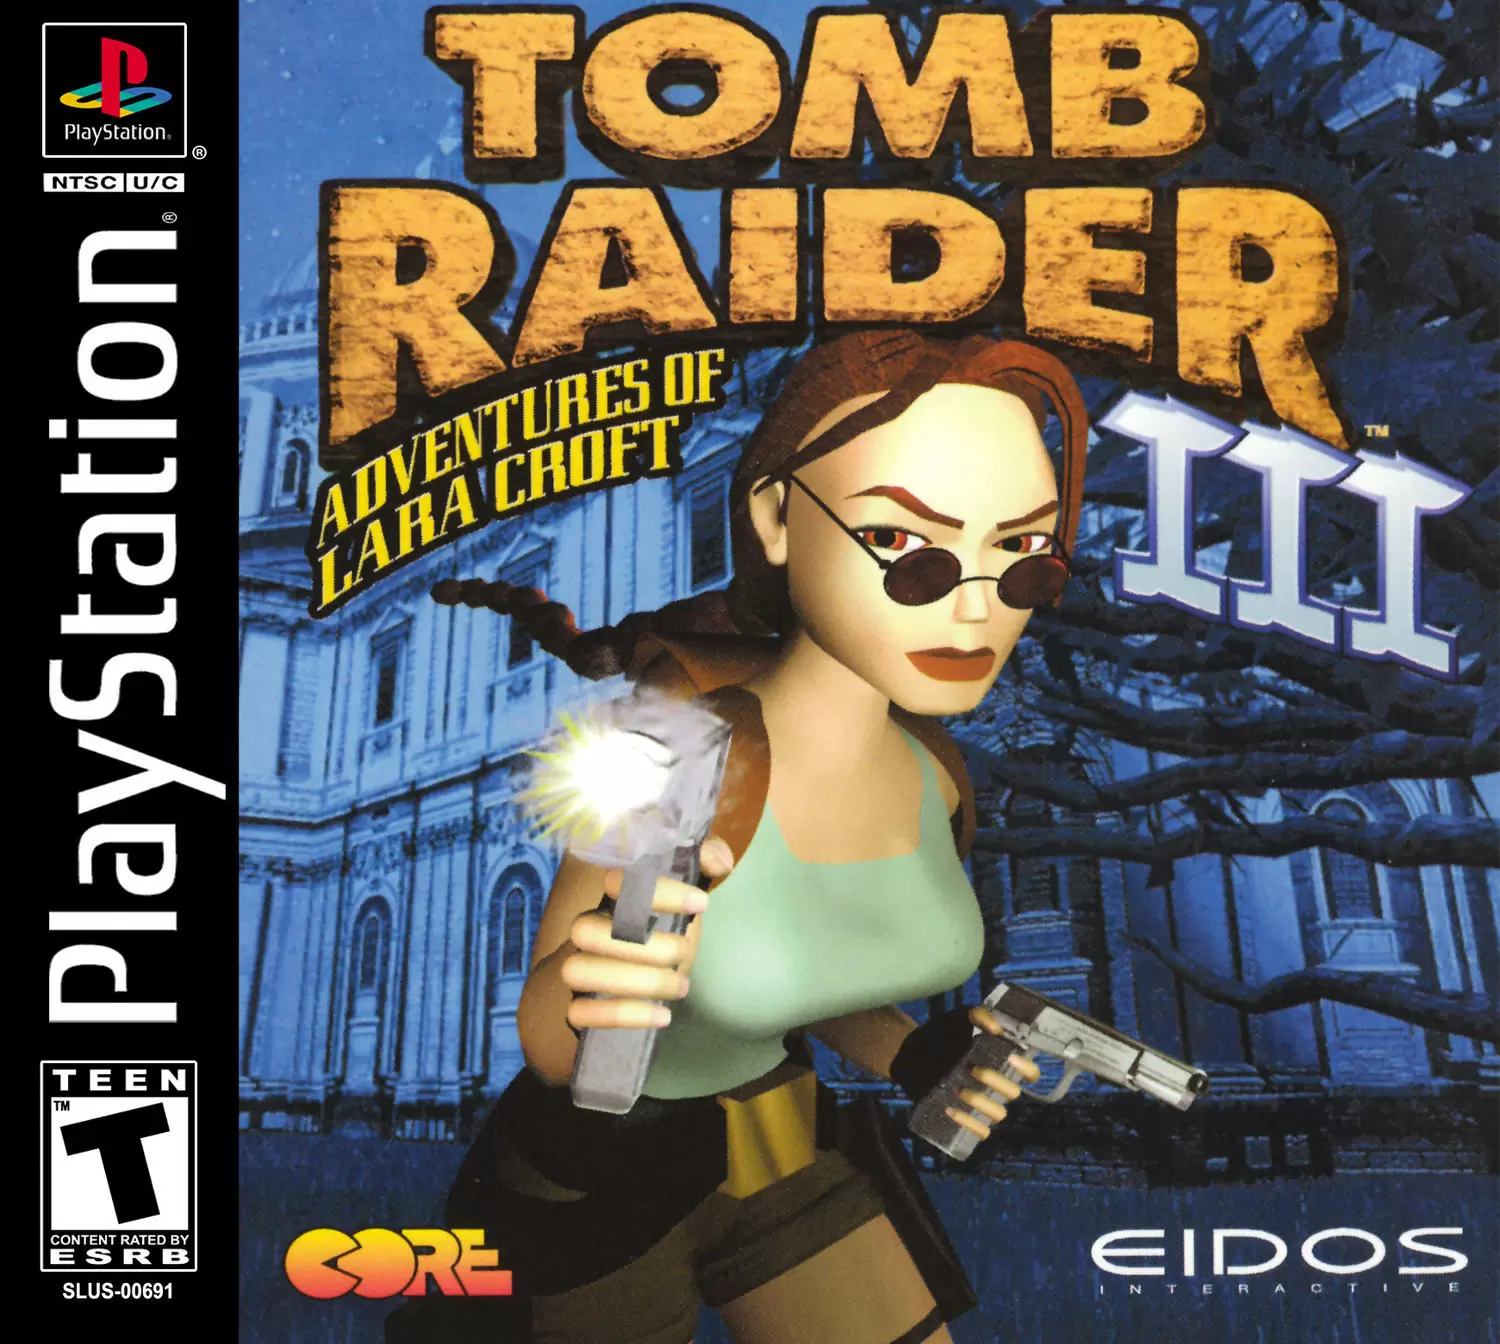 Playstation games - Tomb Raider III: Adventures of Lara Croft